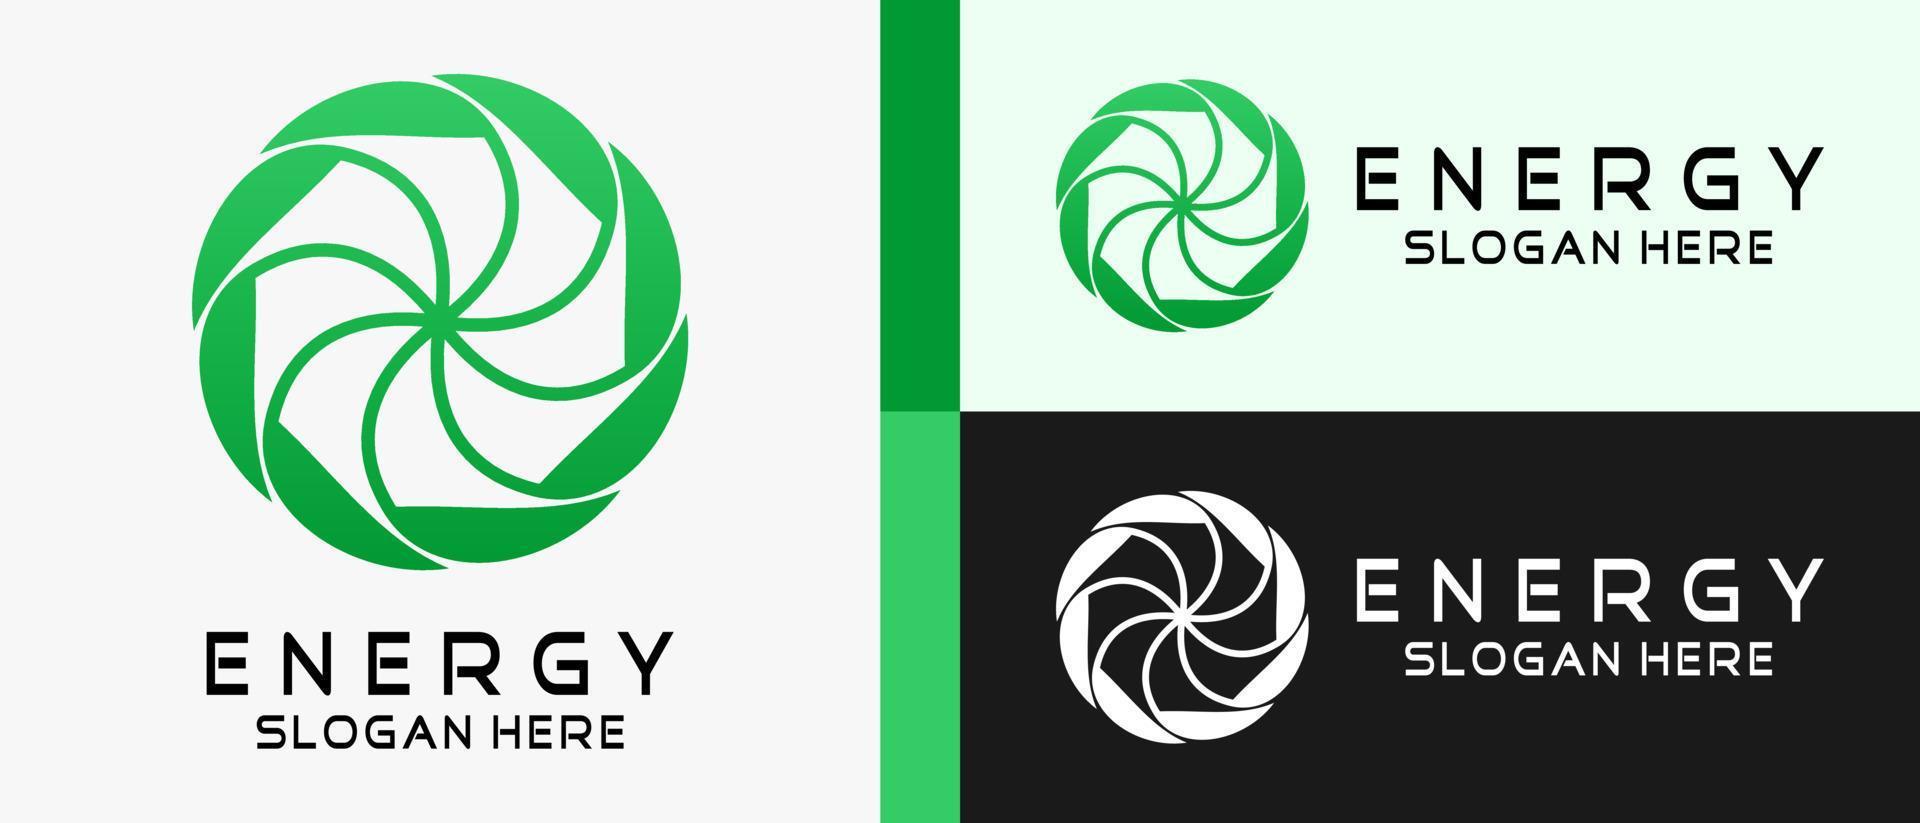 energy logo design template with creative abstract vortex concept. premium vector logo illustration